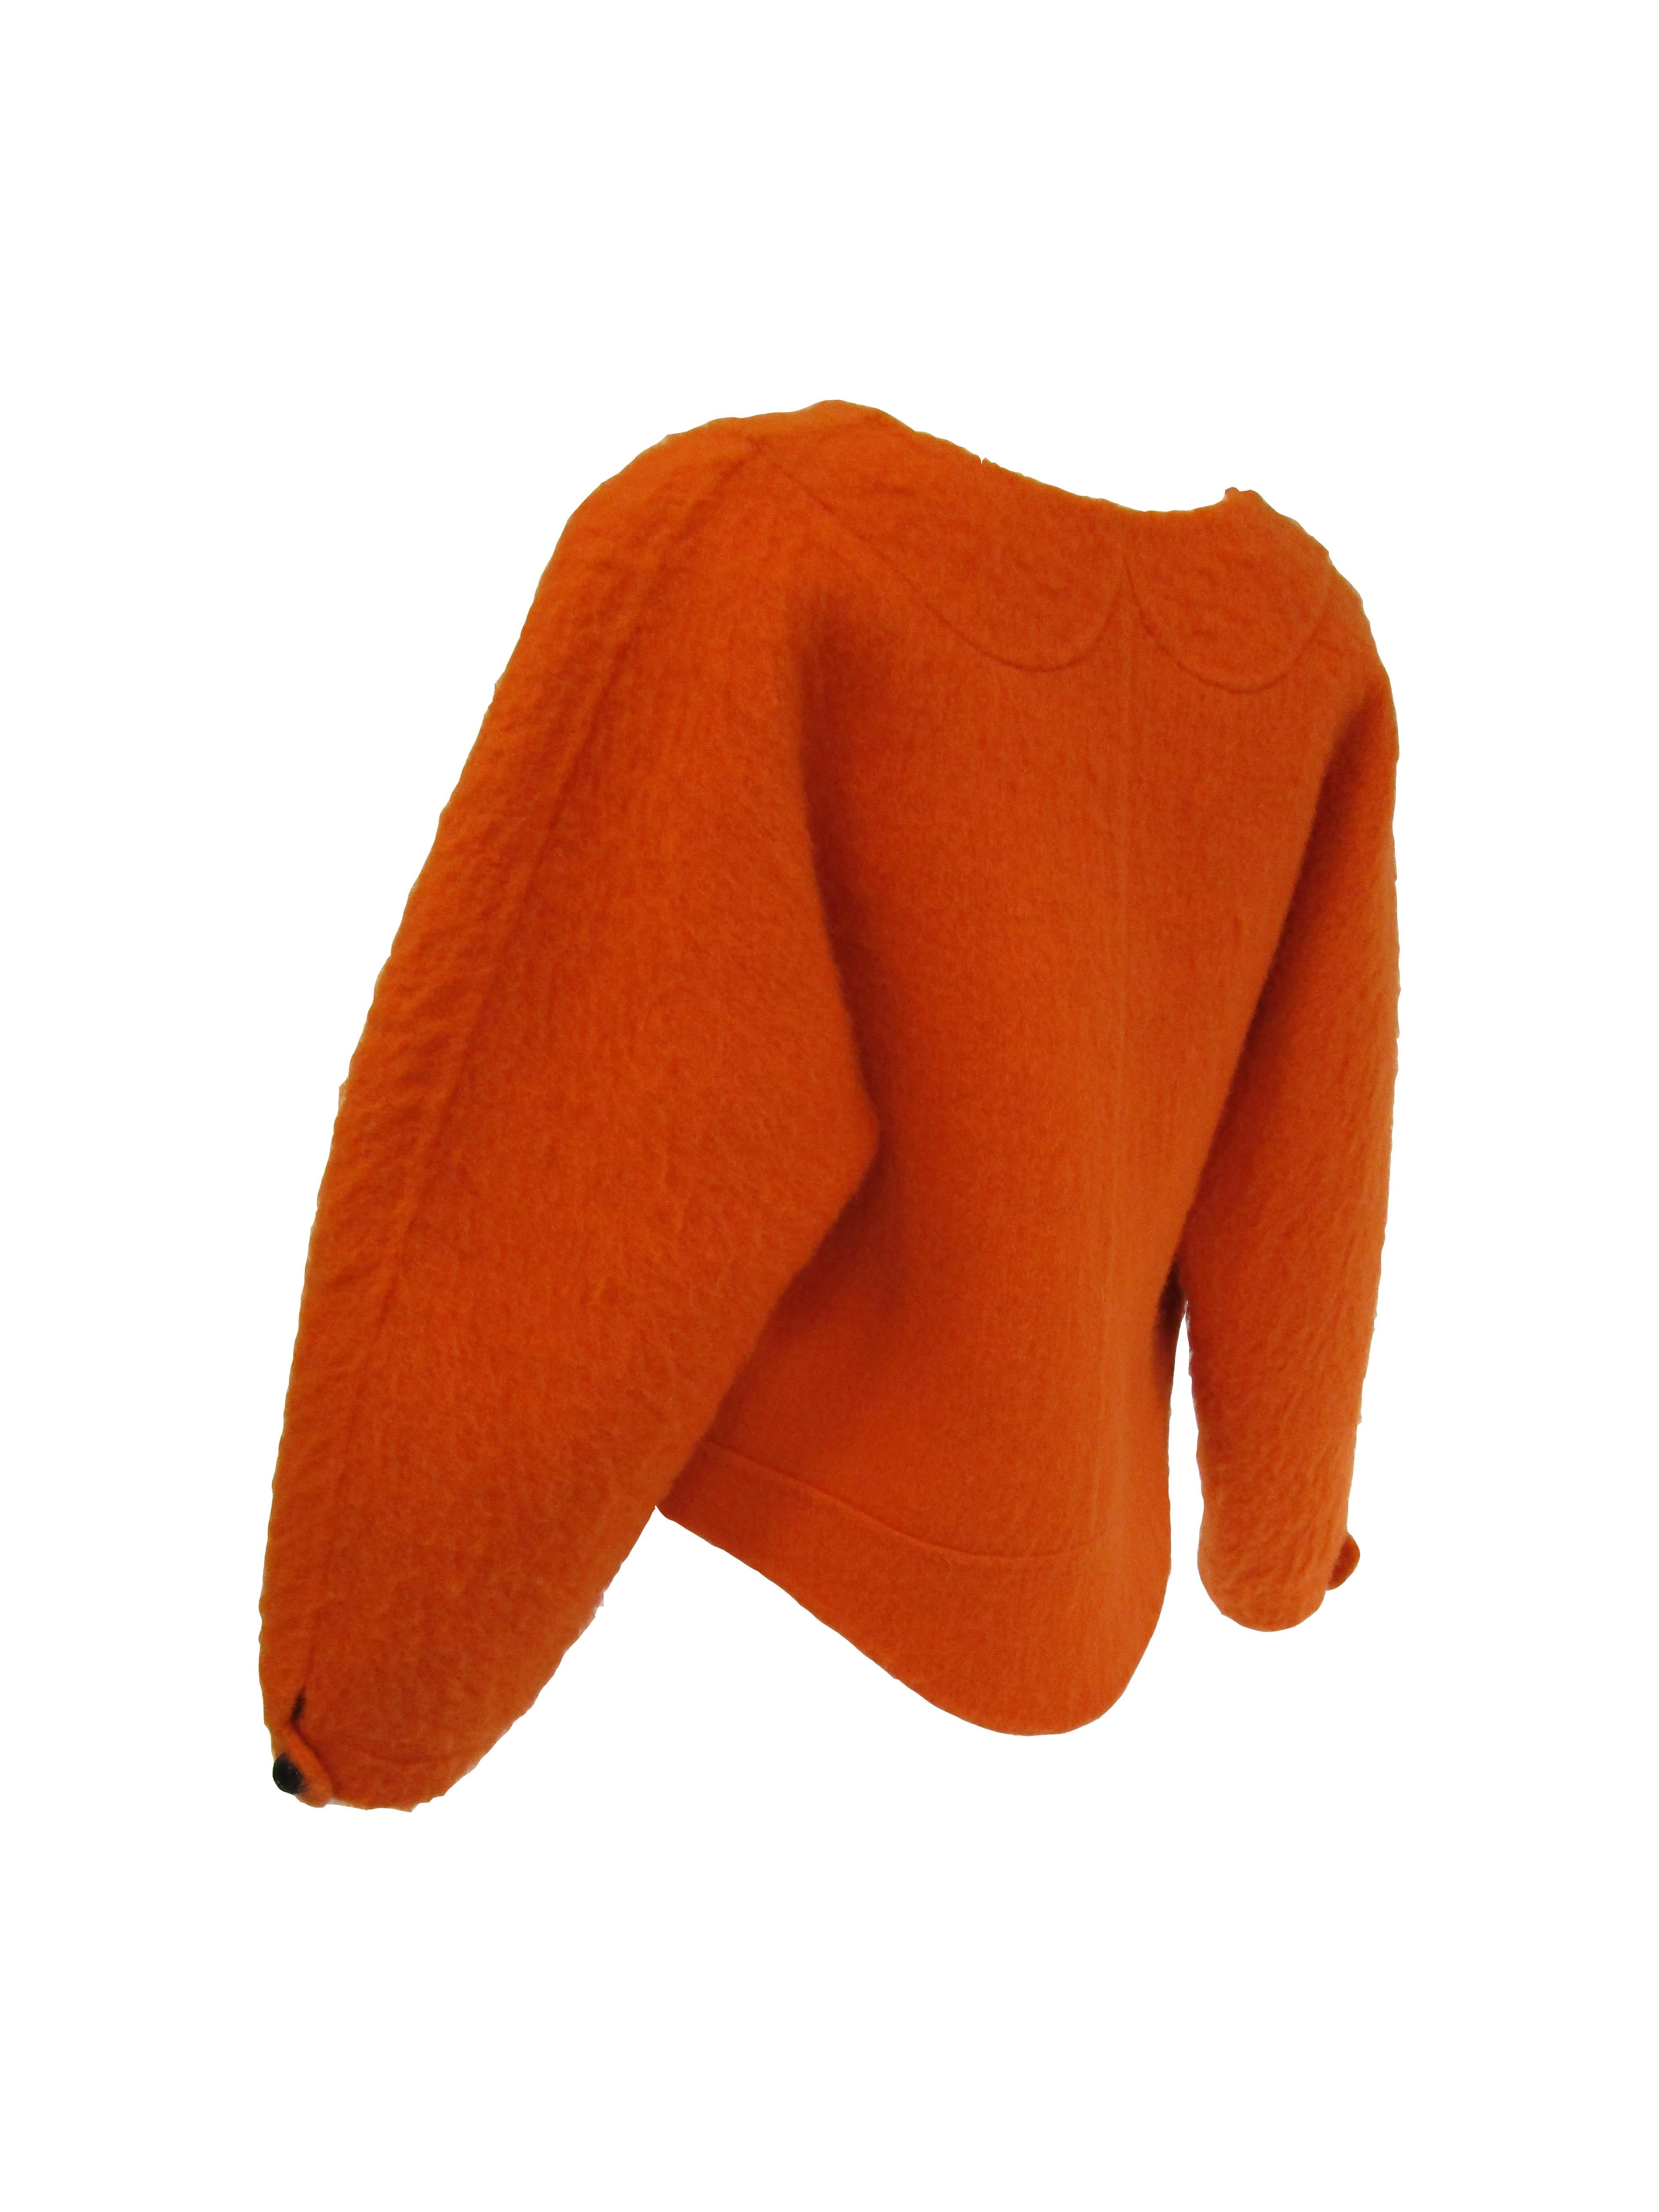  1990s Geoffery Beene Bright Orange Mohair Jacket - Cropped  For Sale 3